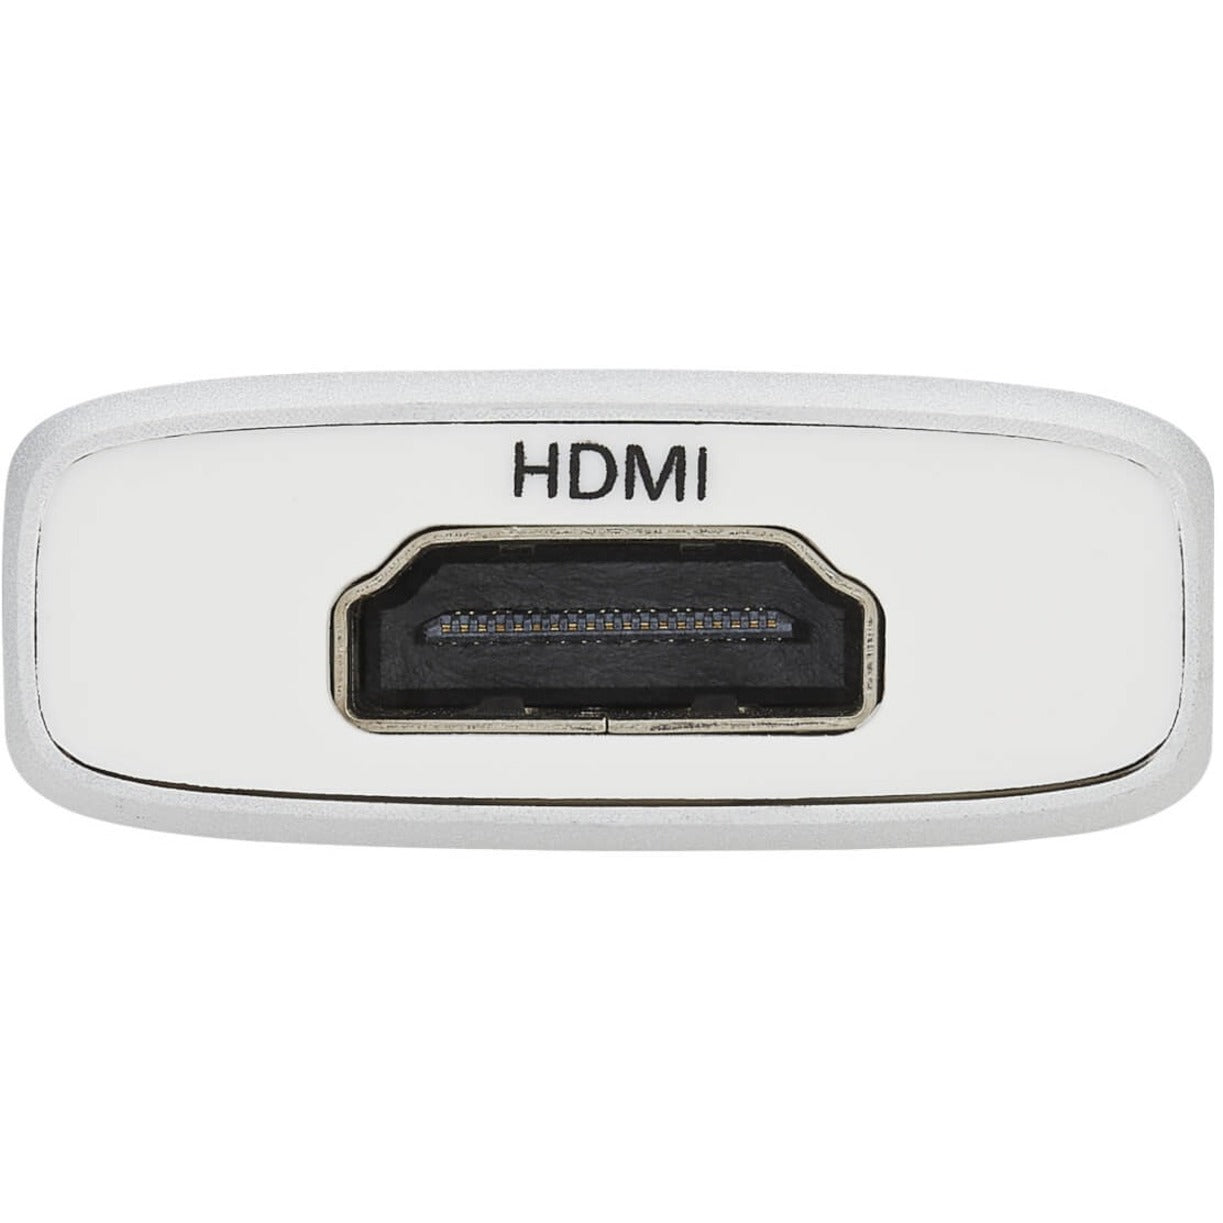 Tripp Lite U442-DOCK10-S Docking Station USB C, 4k @ 30Hz, HDMI, Micro SD, Charging